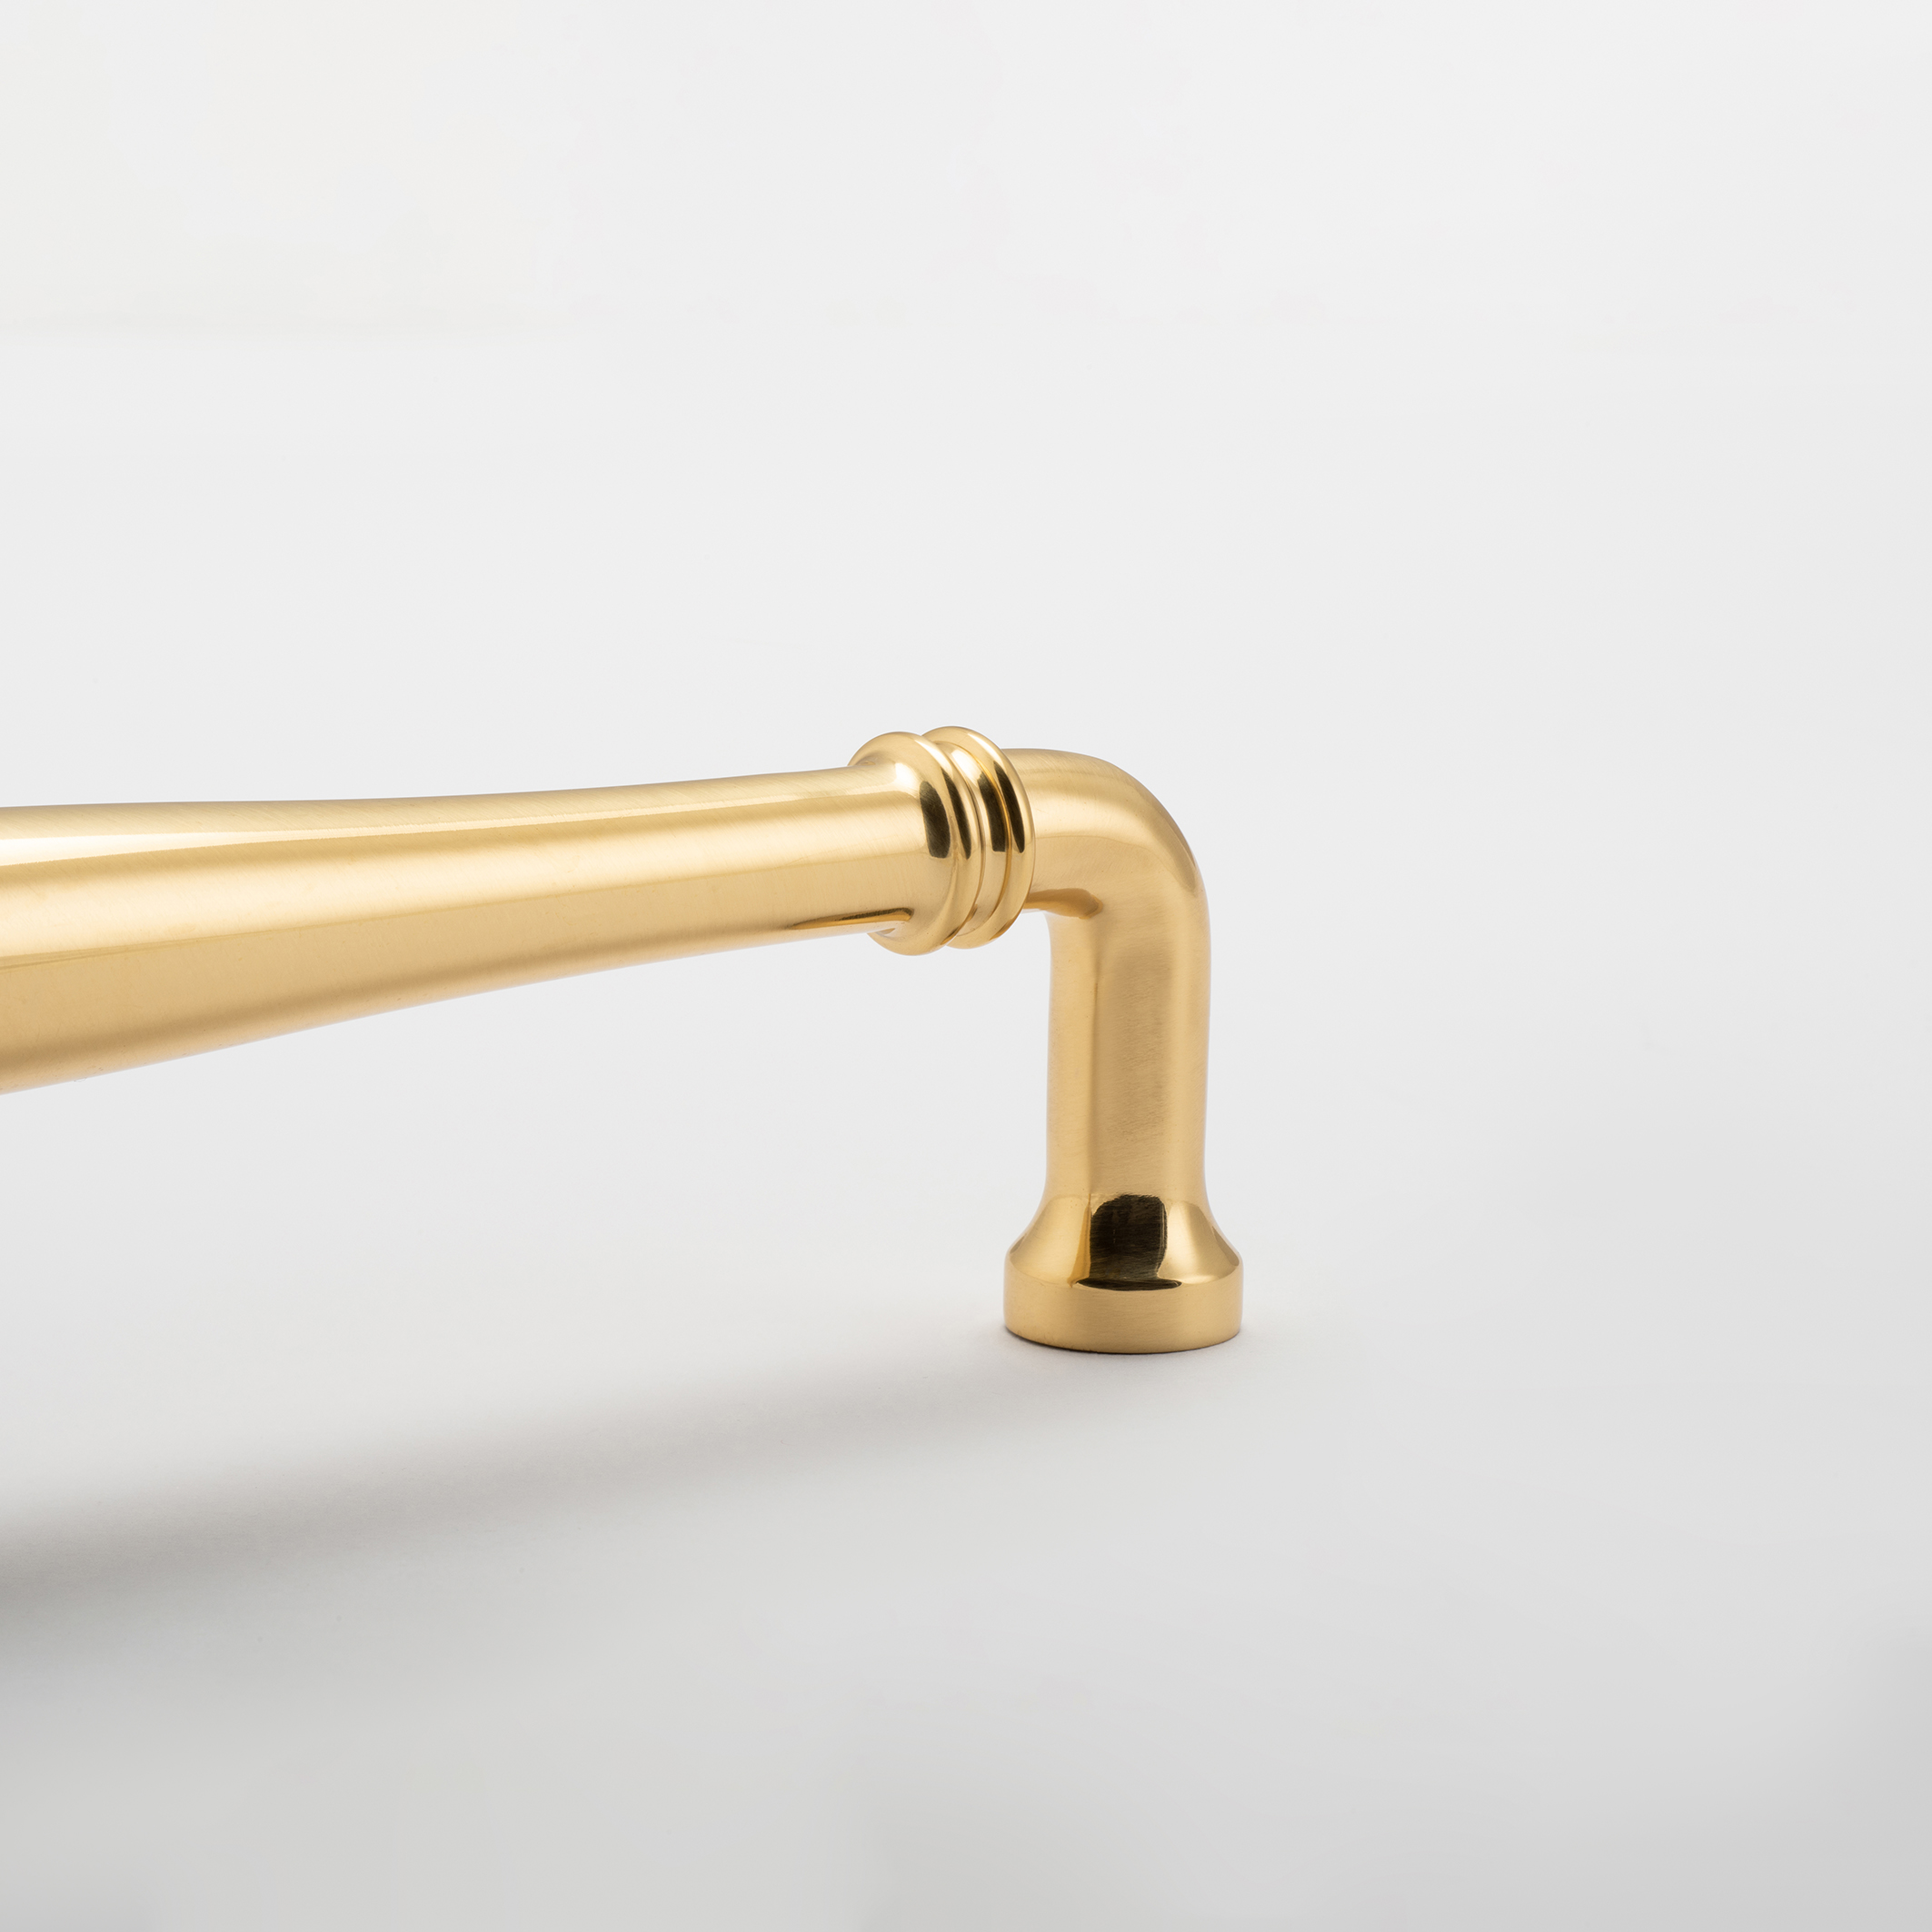 21090 - Sarlat Cabinet Pull - CTC320mm - Polished Brass